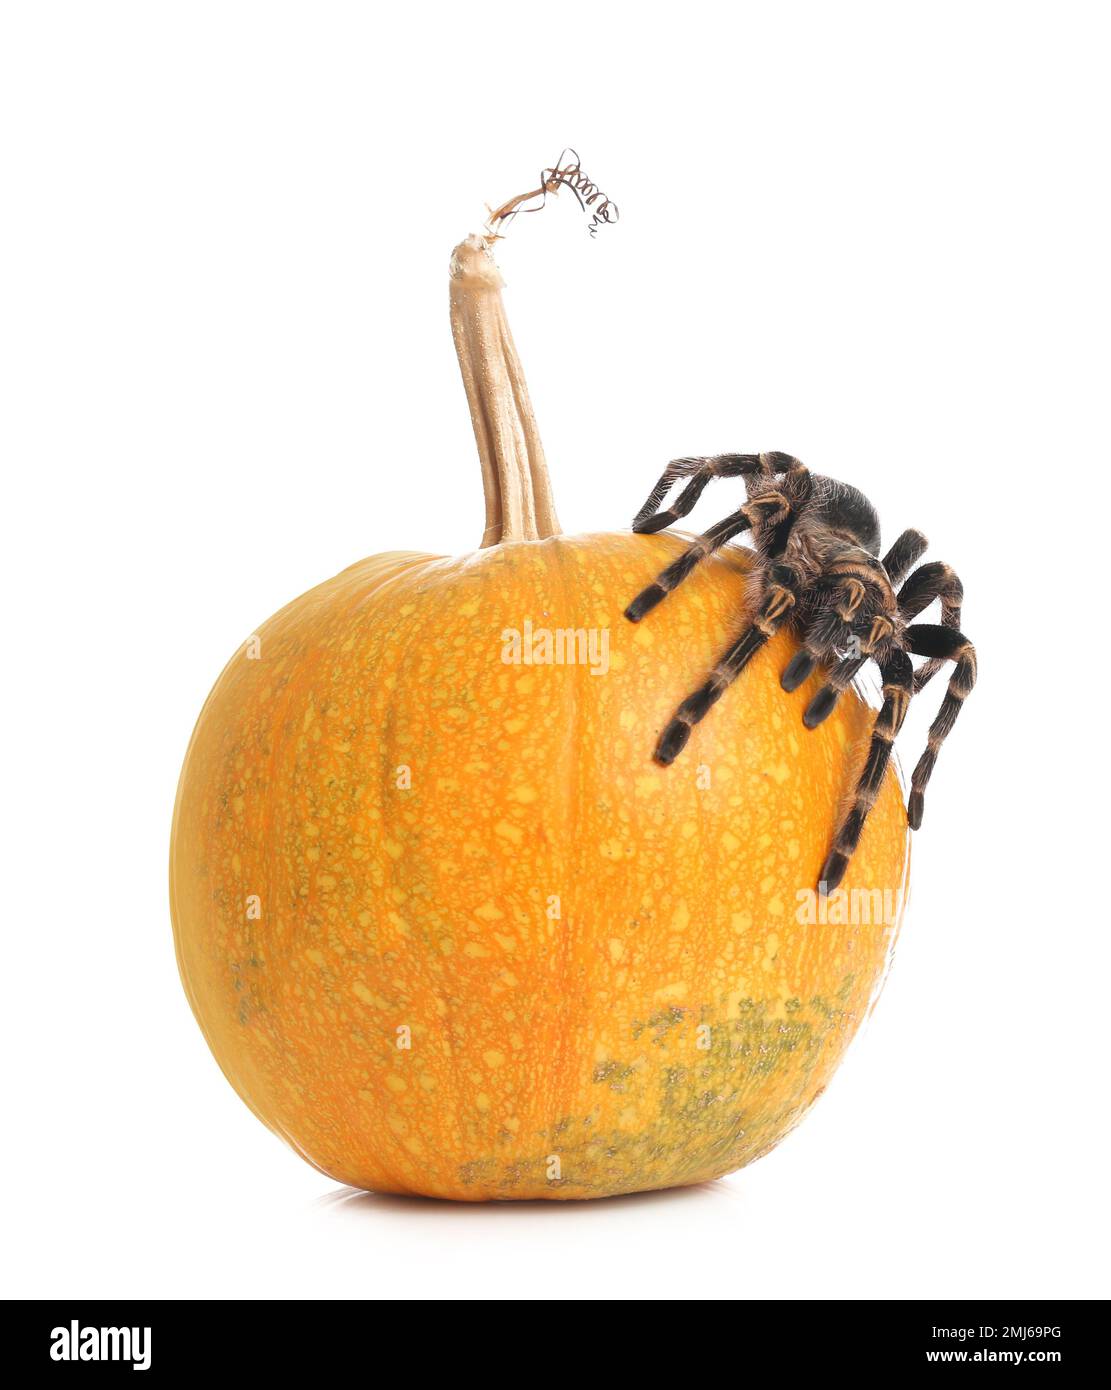 Striped knee tarantula and pumpkin isolated on white. Halloween celebration Stock Photo